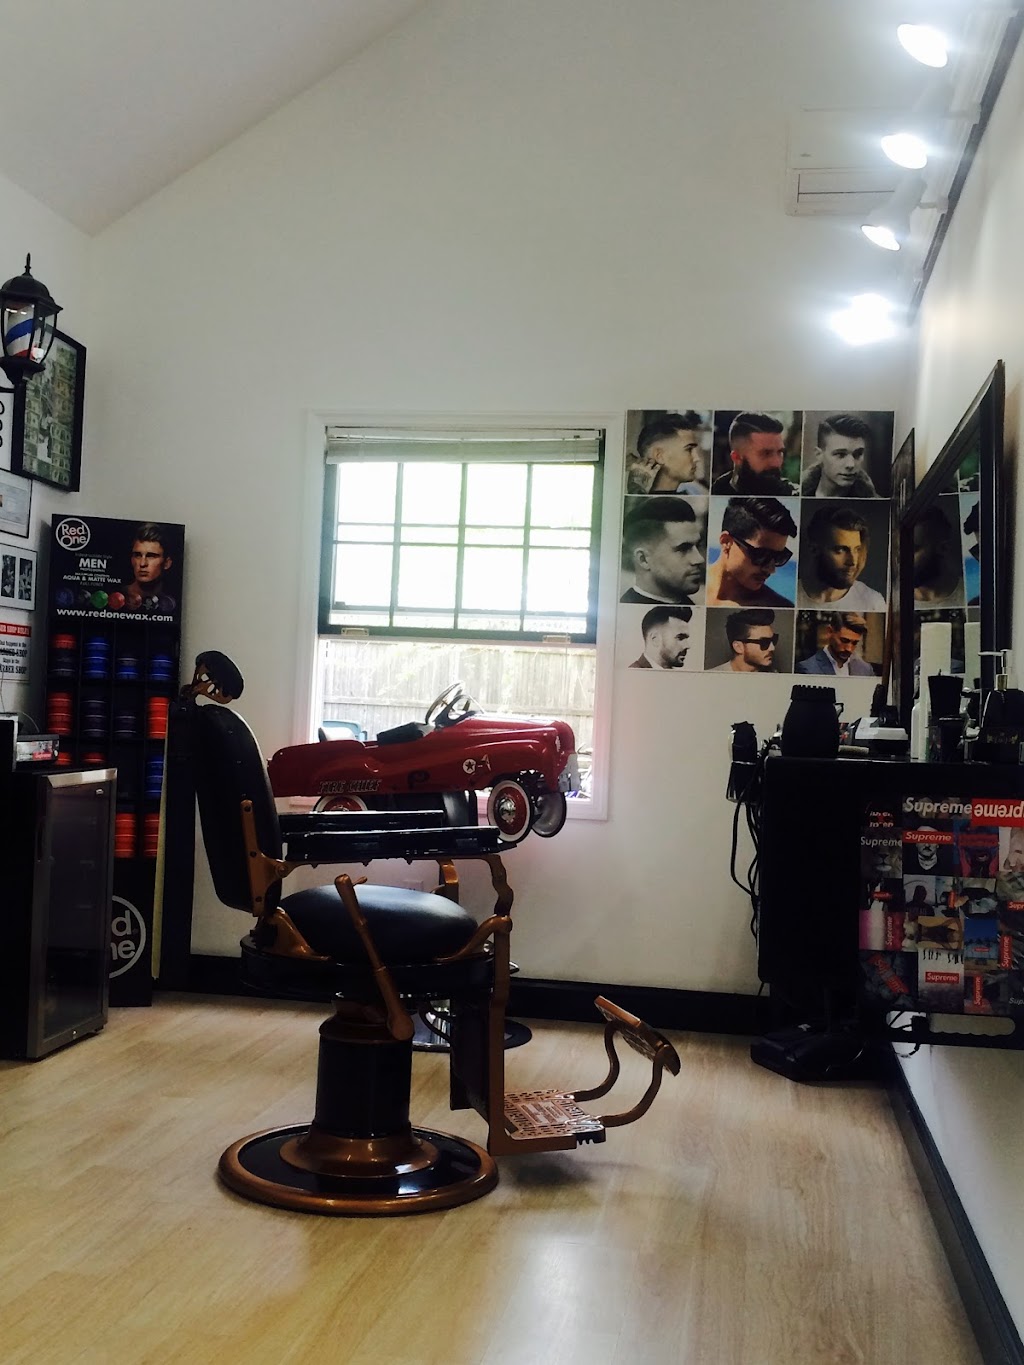 Sterlington Barber shop de Leon | 3 Sterlington Commons, 313 third street, Greenport, NY 11944 | Phone: (631) 965-0163